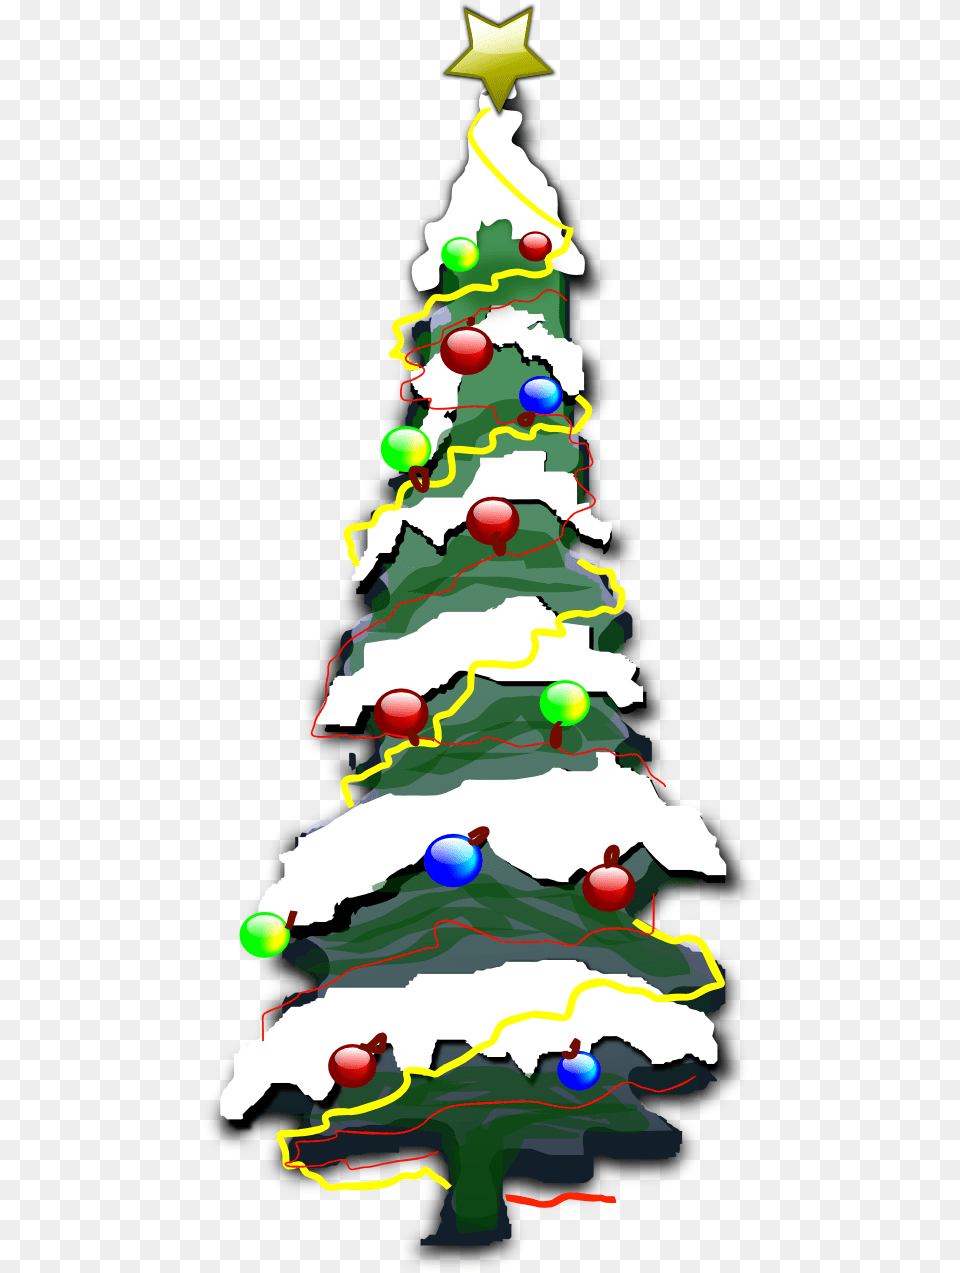 Free Xmas Graphics Download Clip Art Cartoon Christmas Tree Snow, Christmas Decorations, Festival, Plant, Christmas Tree Png Image